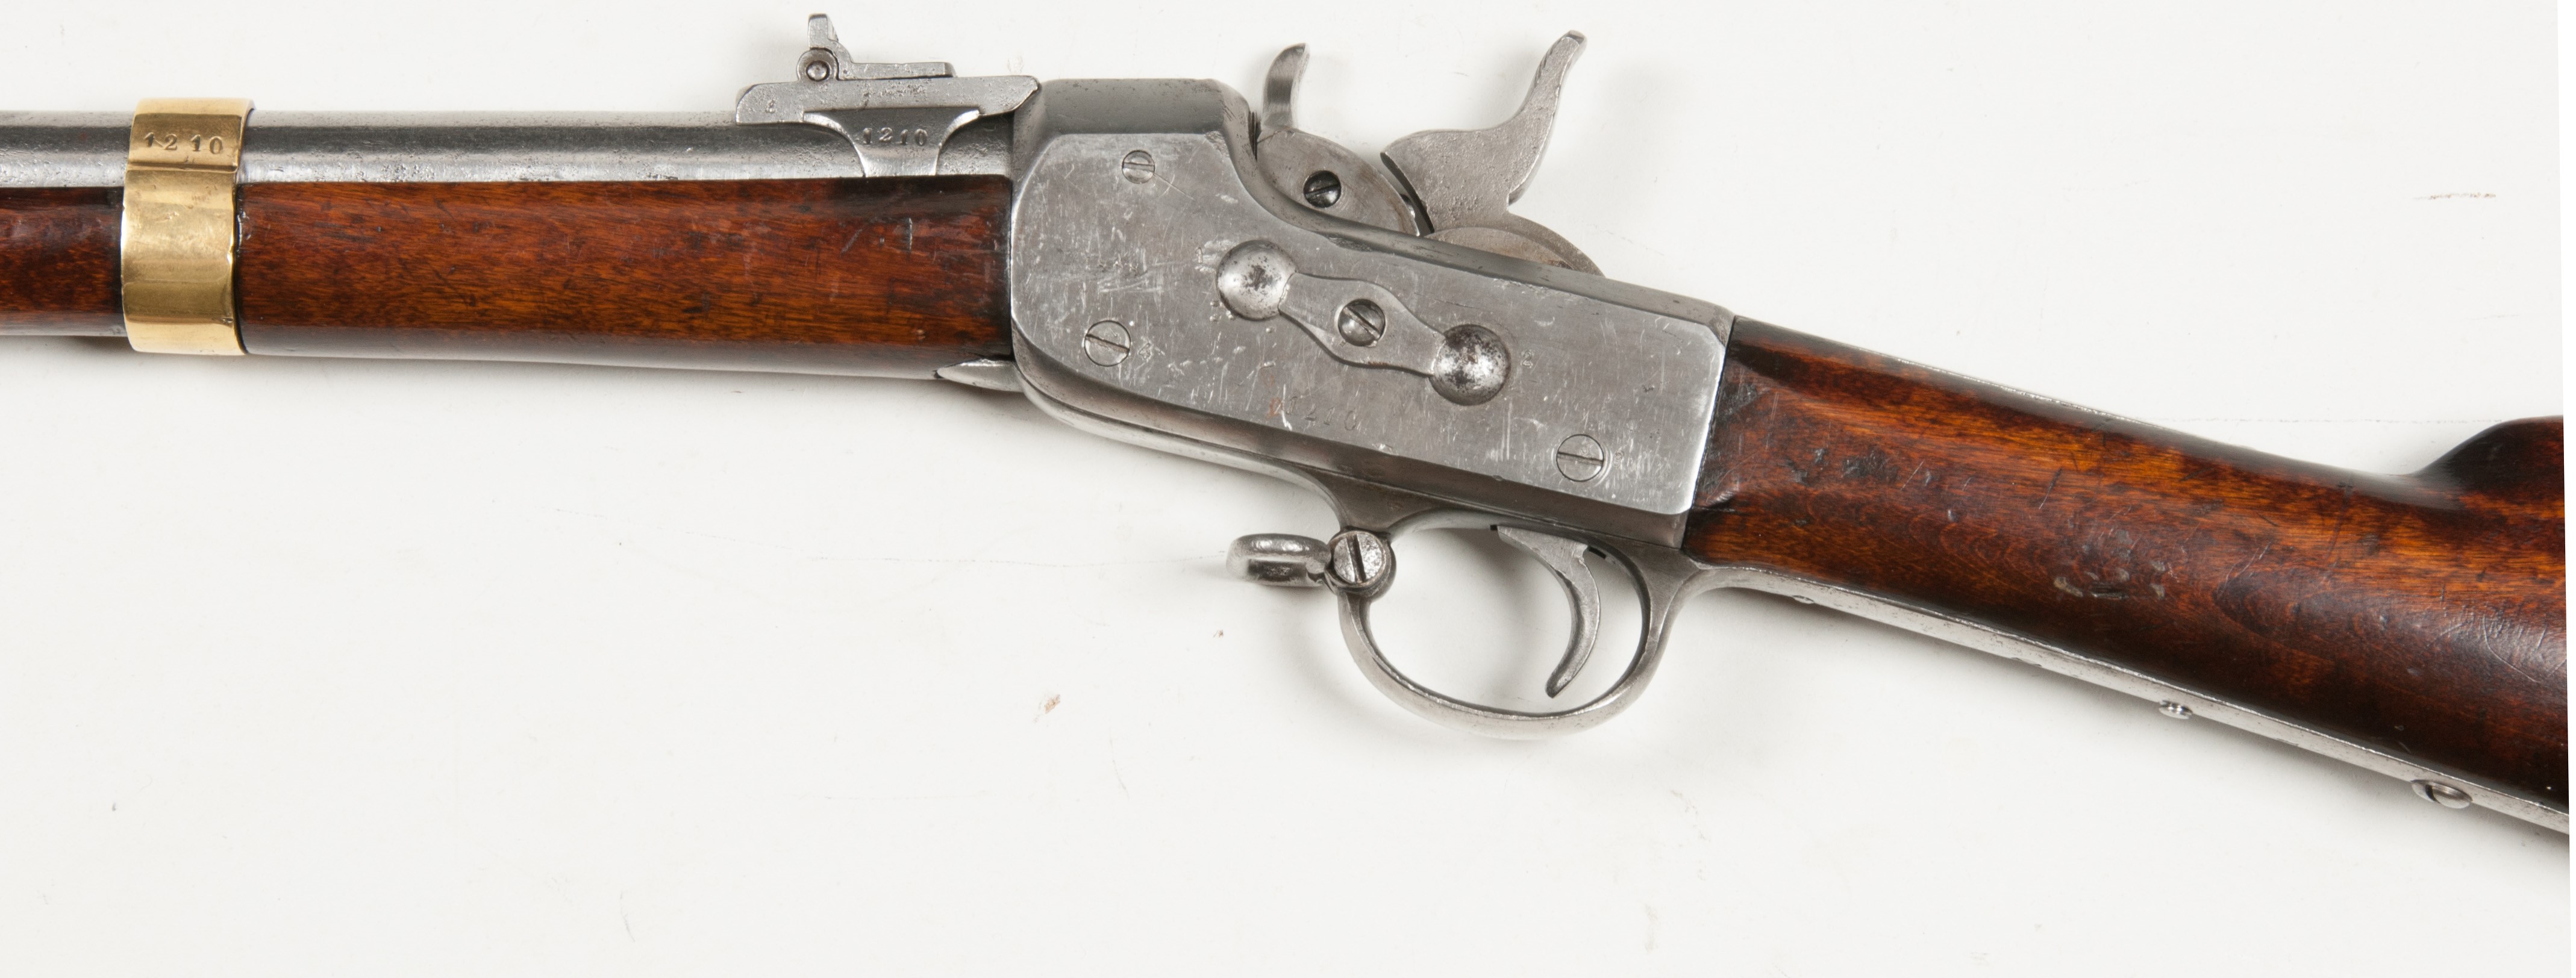 ./guns/rifle/bilder/Rifle-Kongsberg-RollingBlock-M1860-67-MARINE-1868-1210-3.jpg